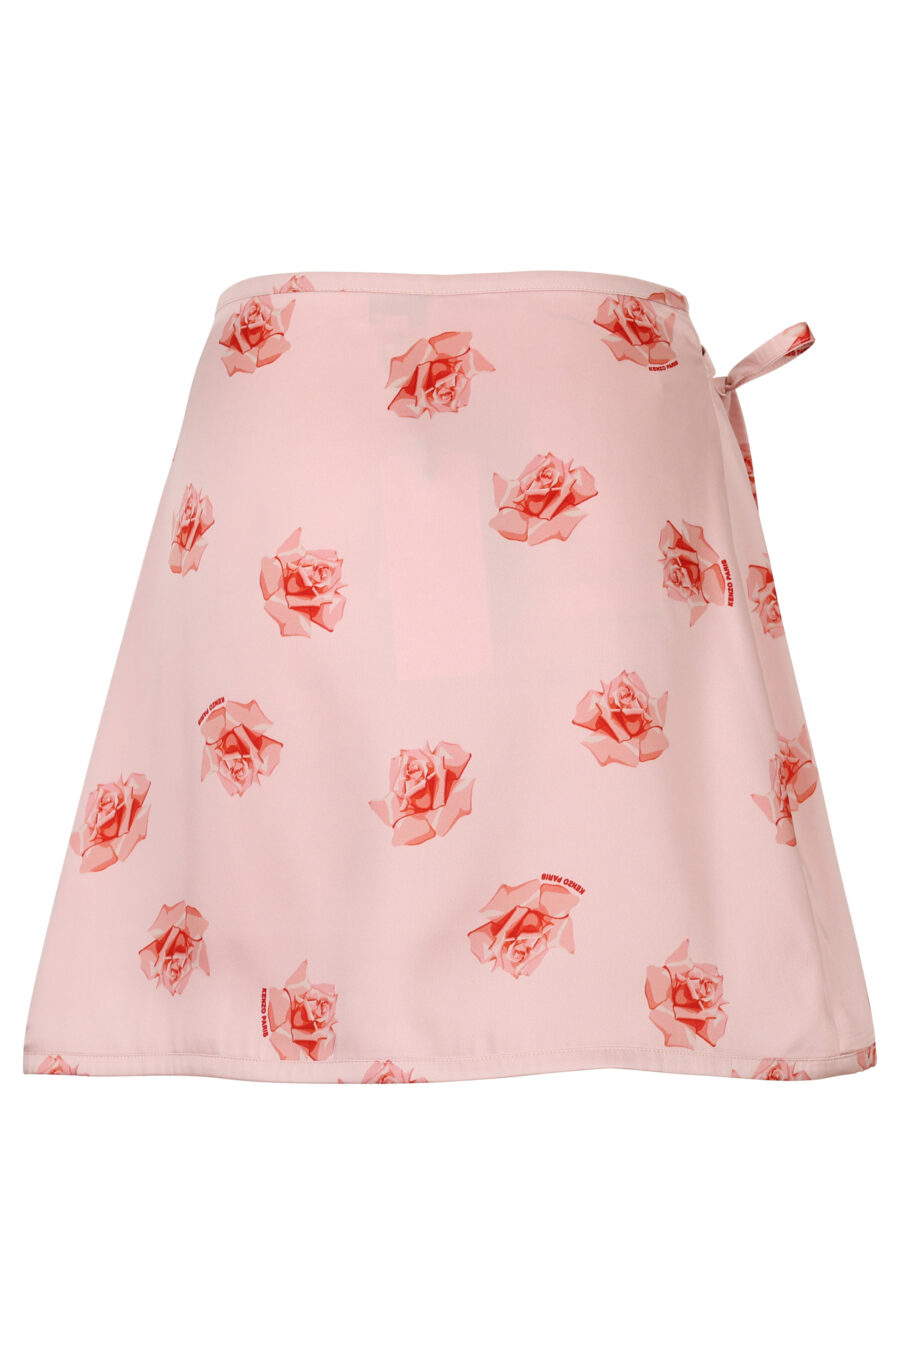 Pink skirt with "kenzo rose" print - 3612230616165 1